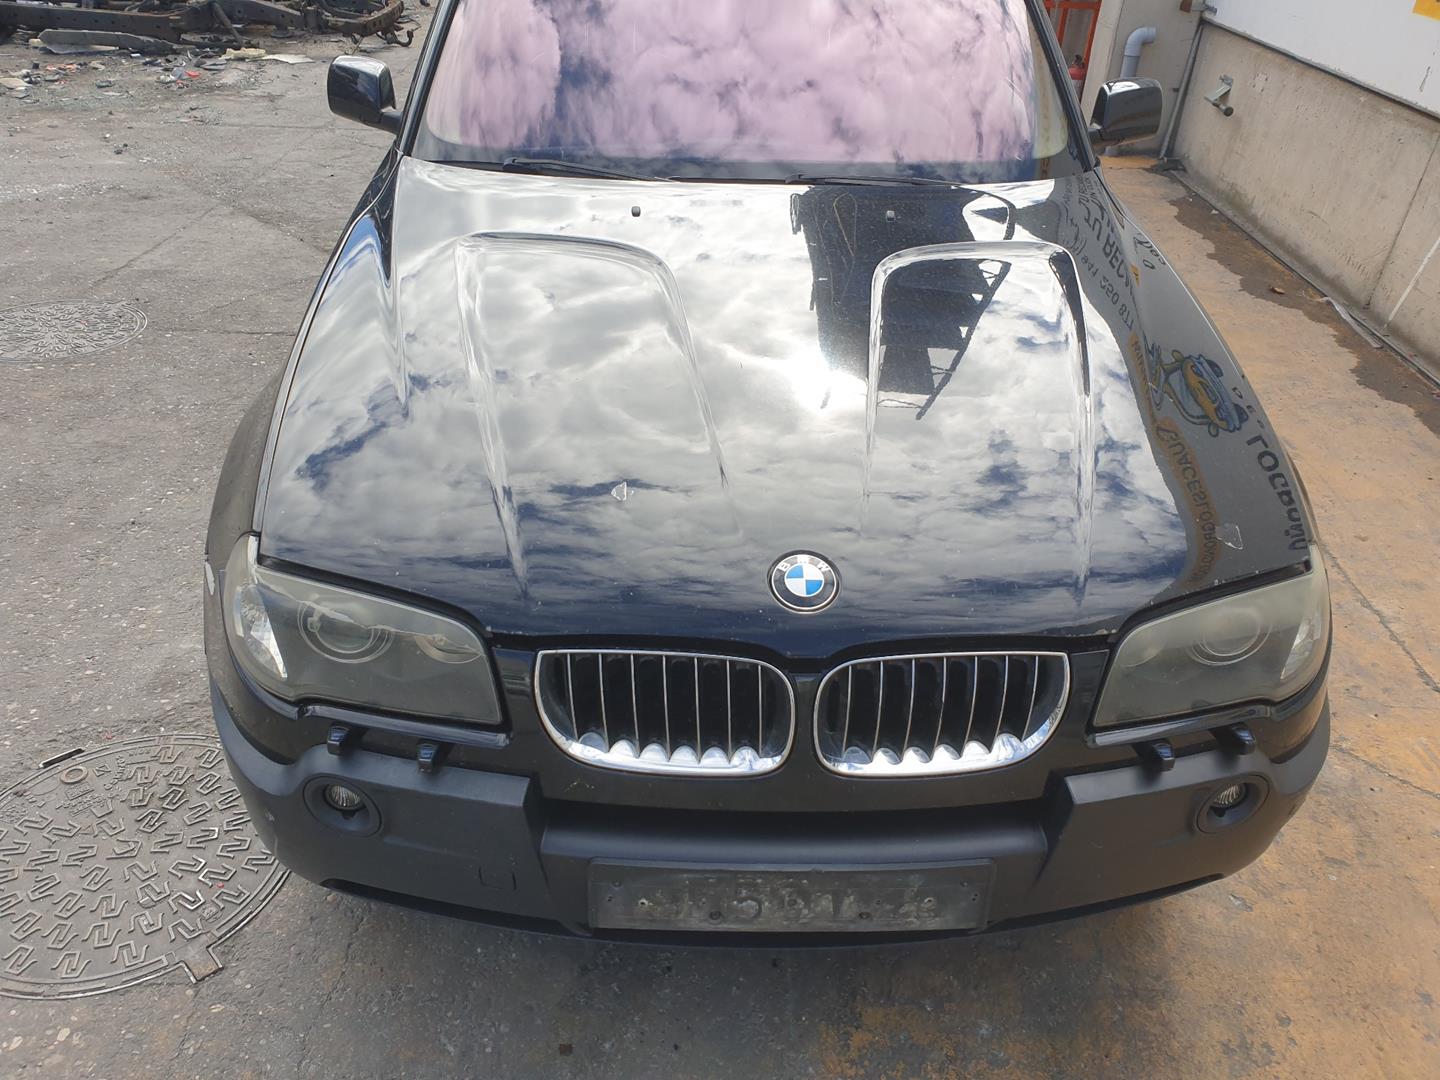 BMW X3 E83 (2003-2010) Klimato kontrolės (klimos) valdymas 64113426630, 64113443981 24157045